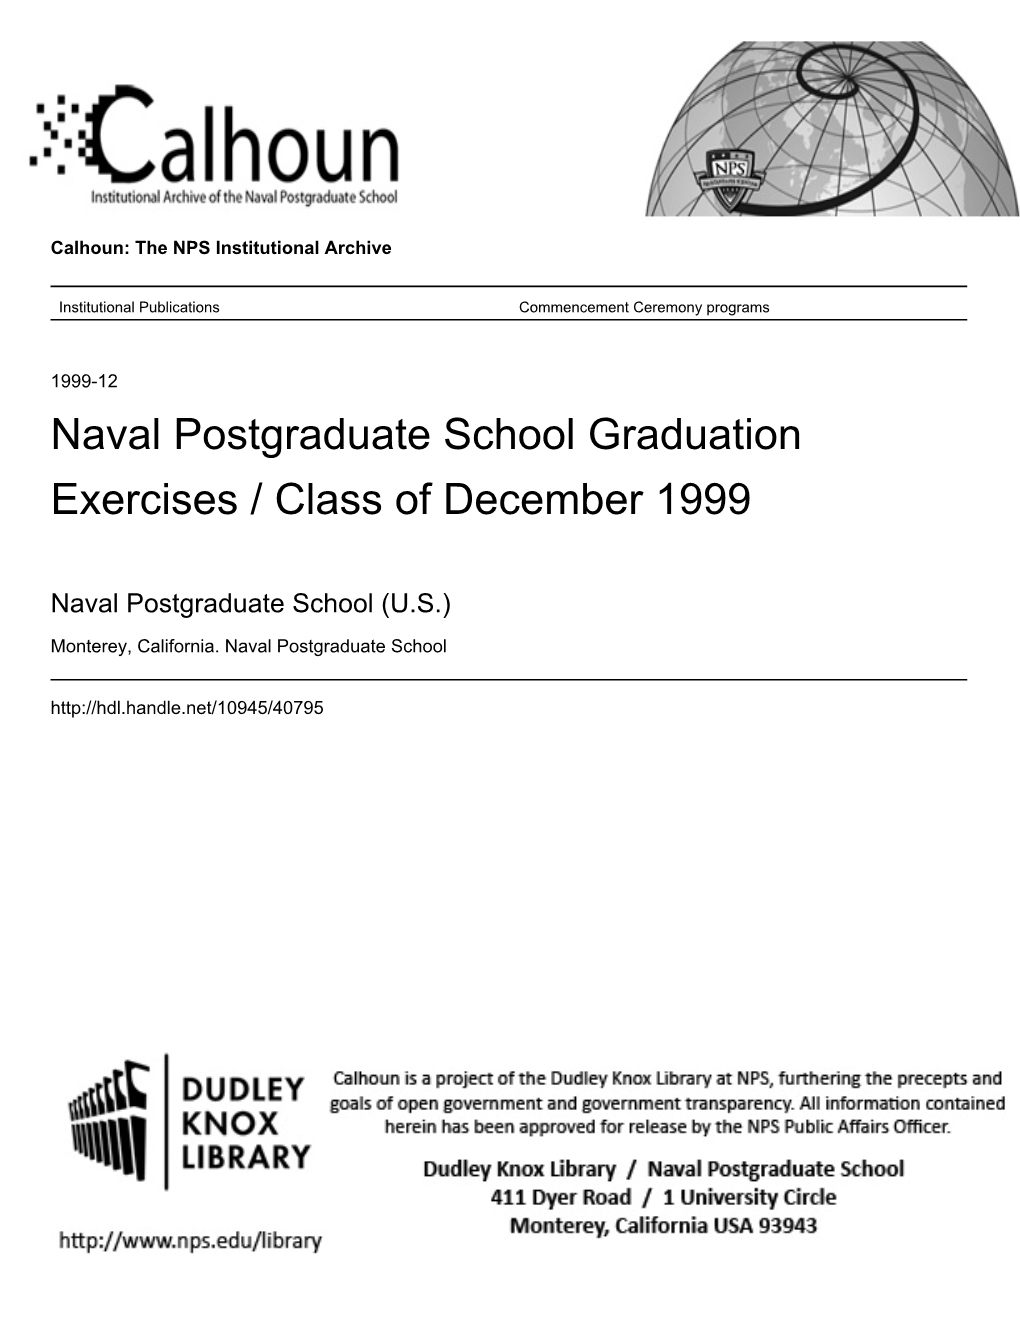 Naval Postgraduate School Graduation Exercises / Class of December 1999